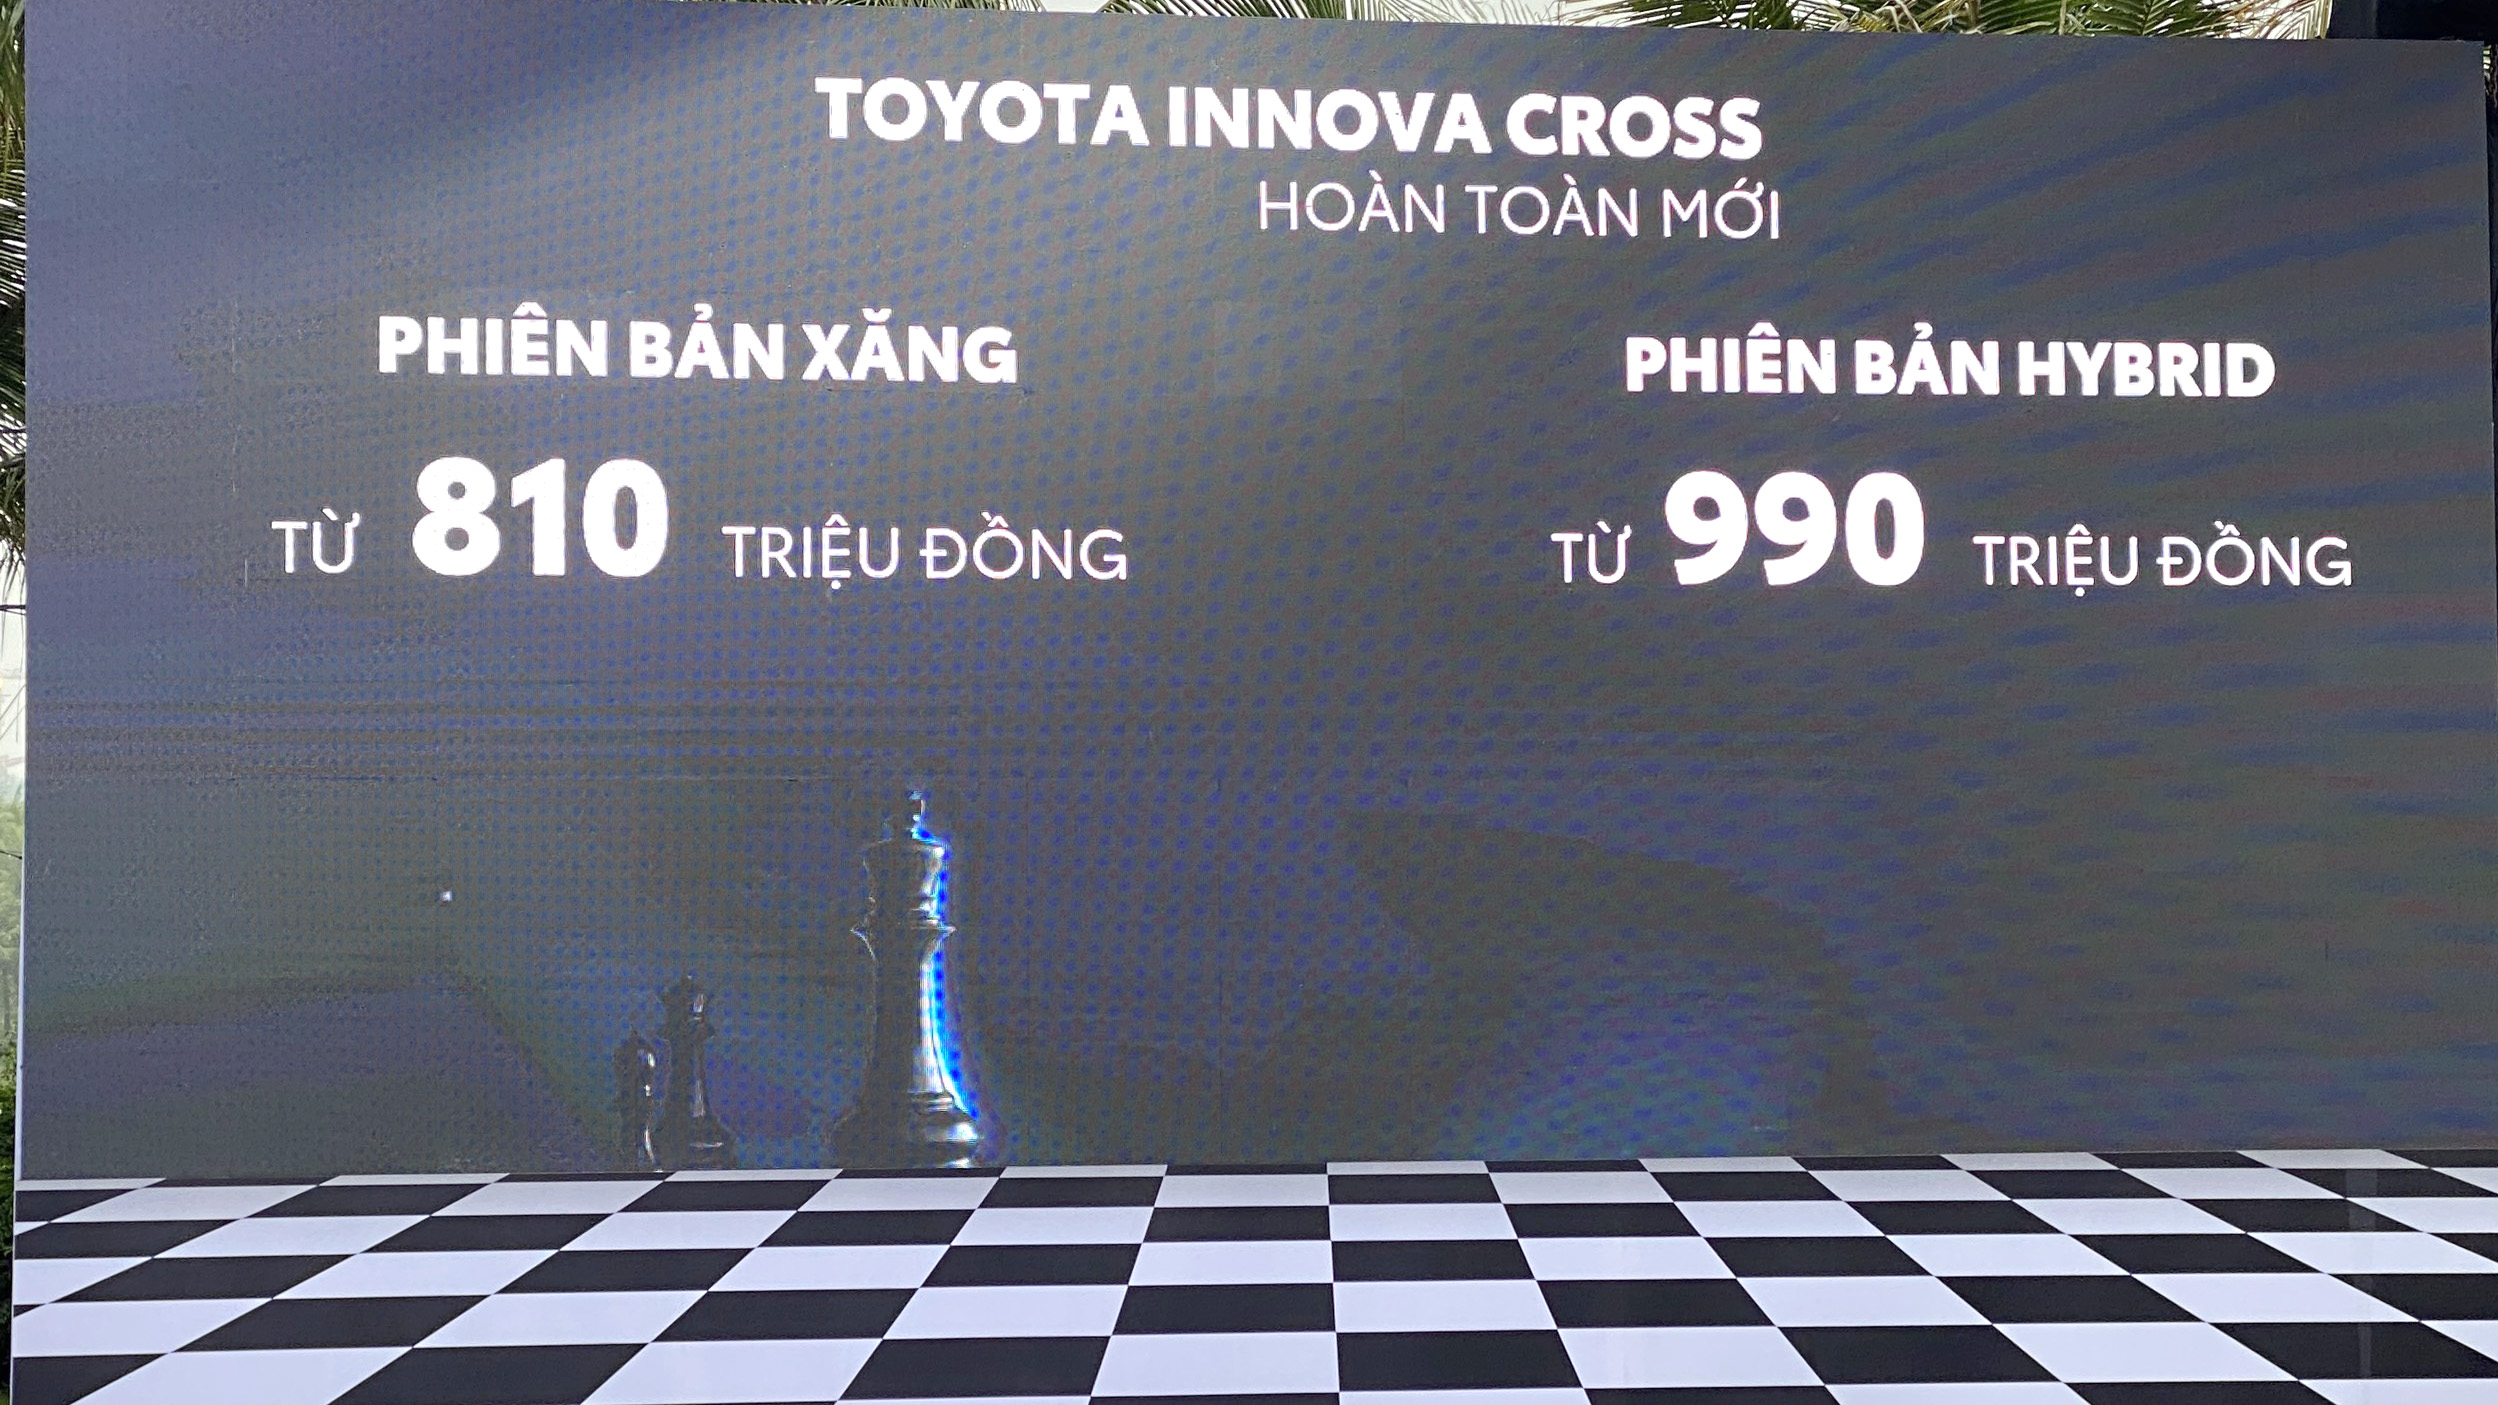 Toyota Innova Cross officially launched in Vietnam, price from 810 million innova-cross-01.jpg